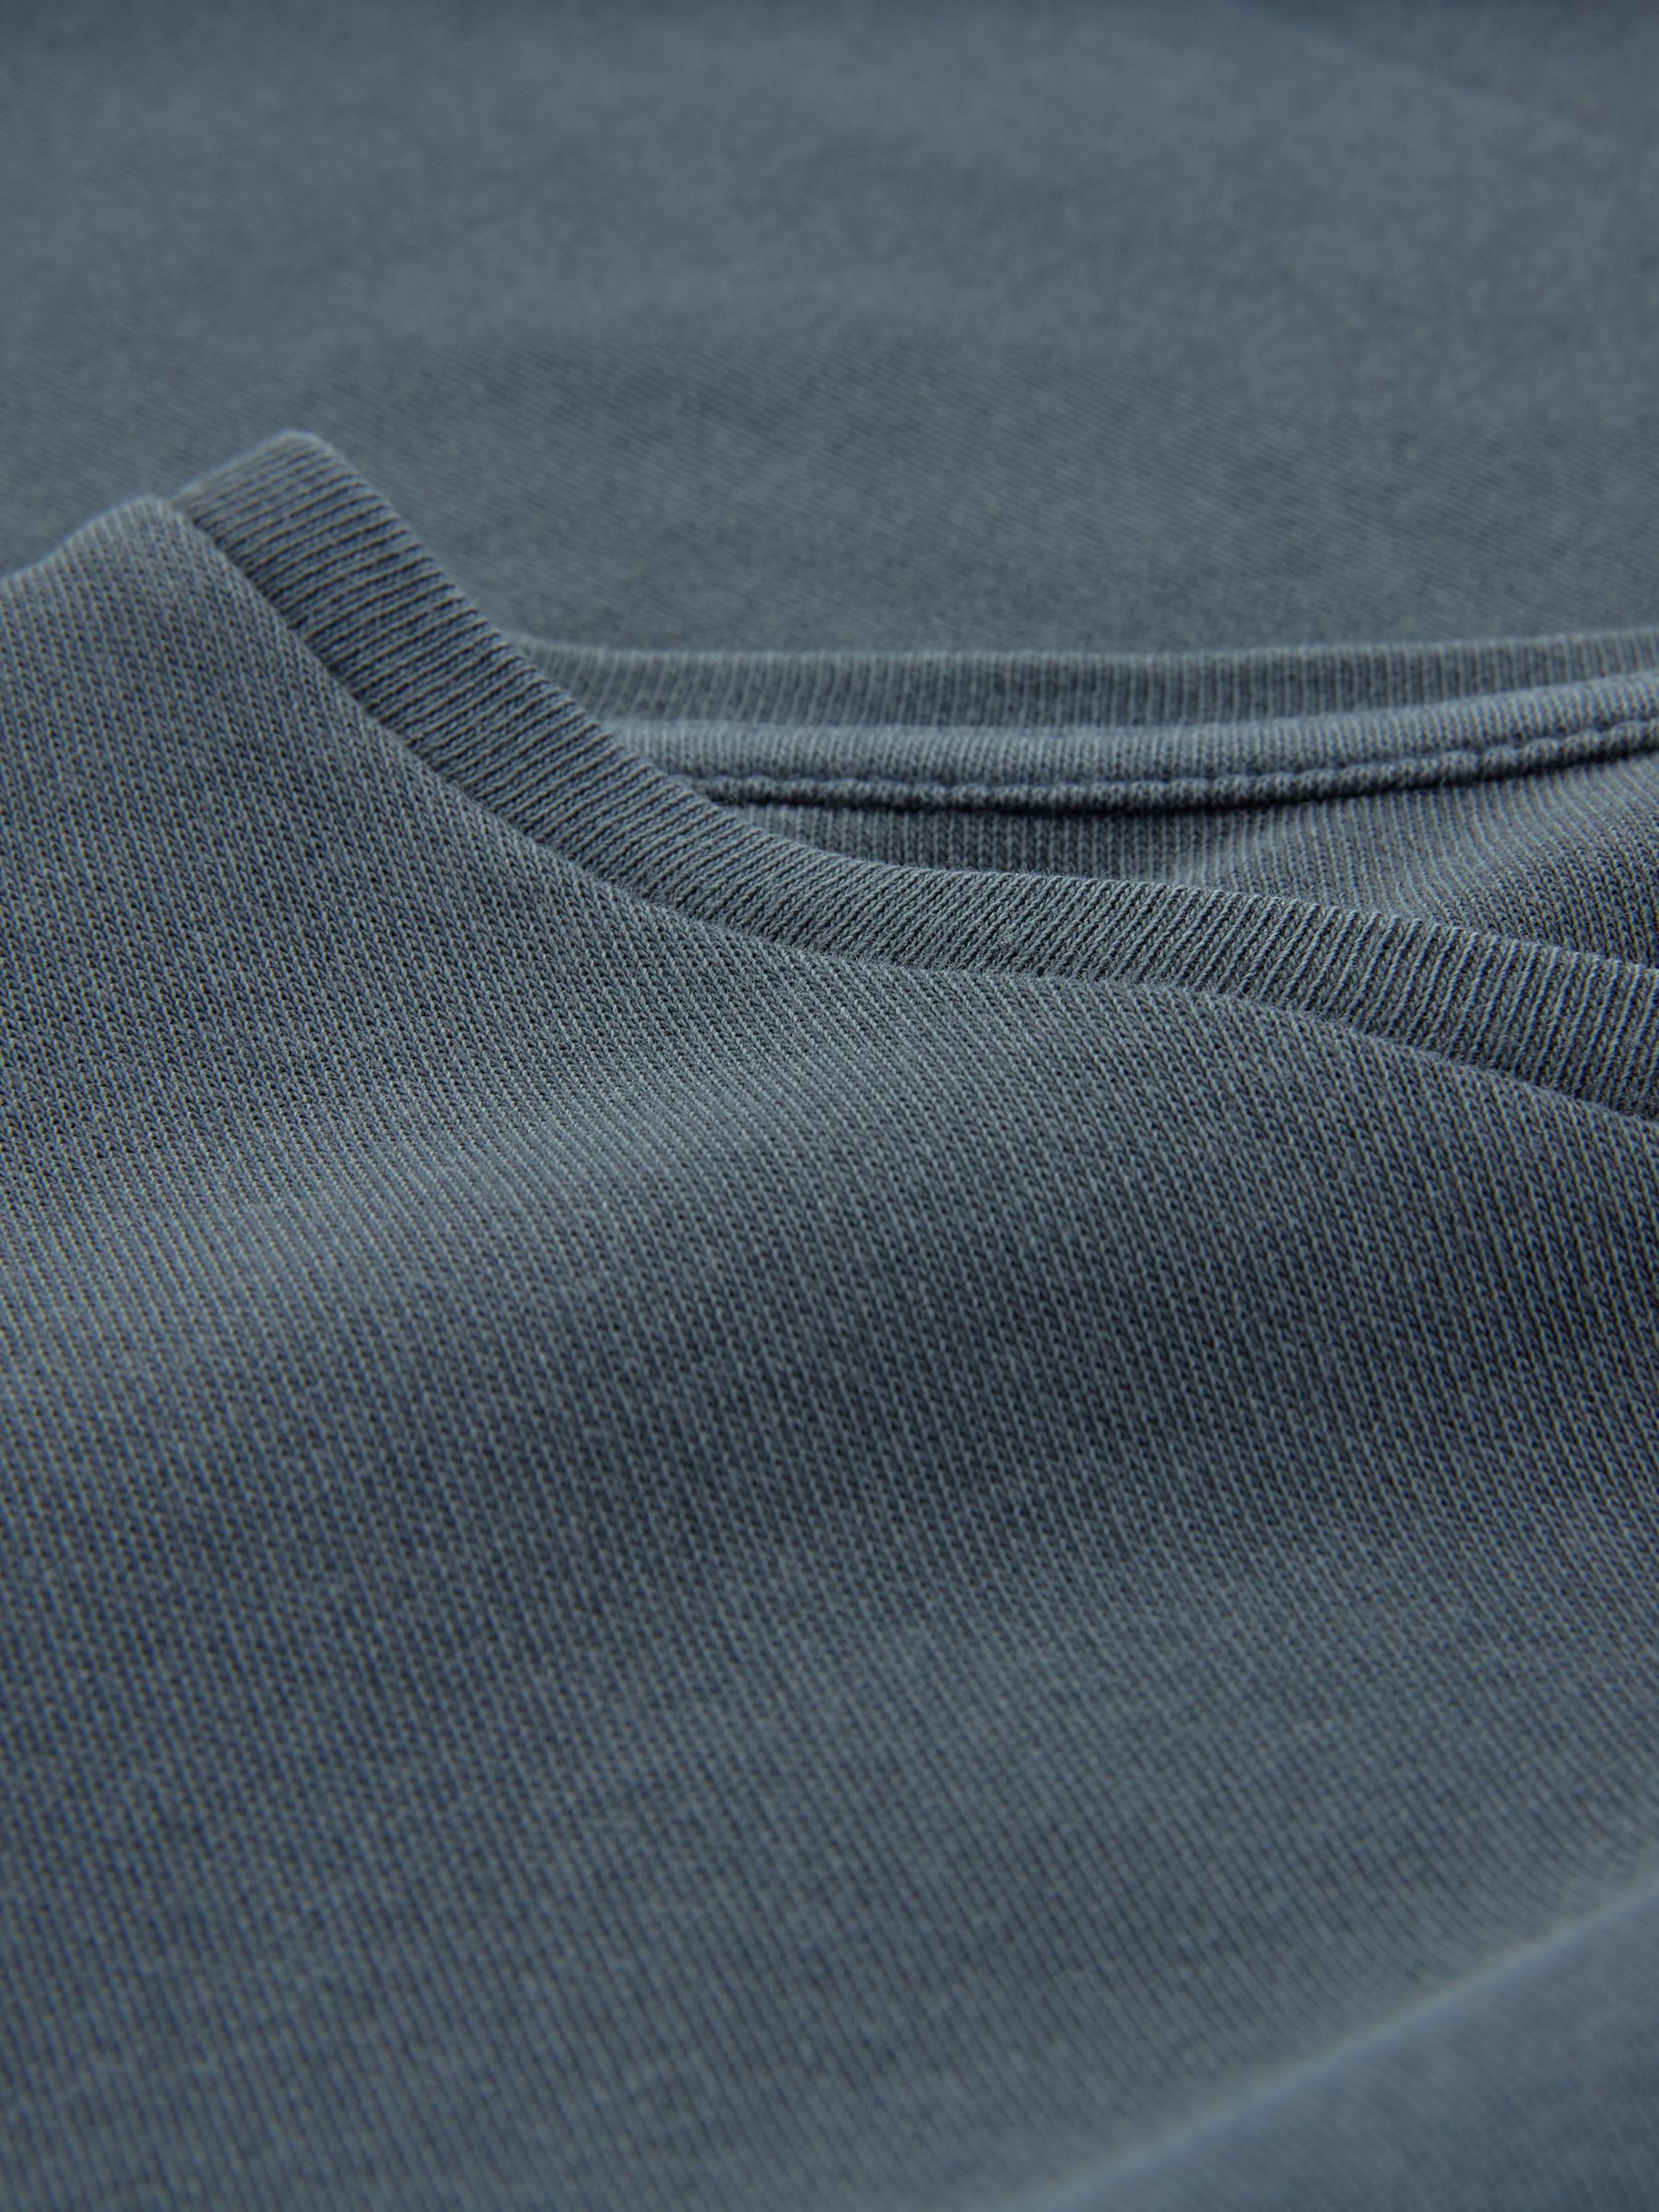 Celtic & Co. Organic Cotton T-Shirt Dress, Derby Grey, 14